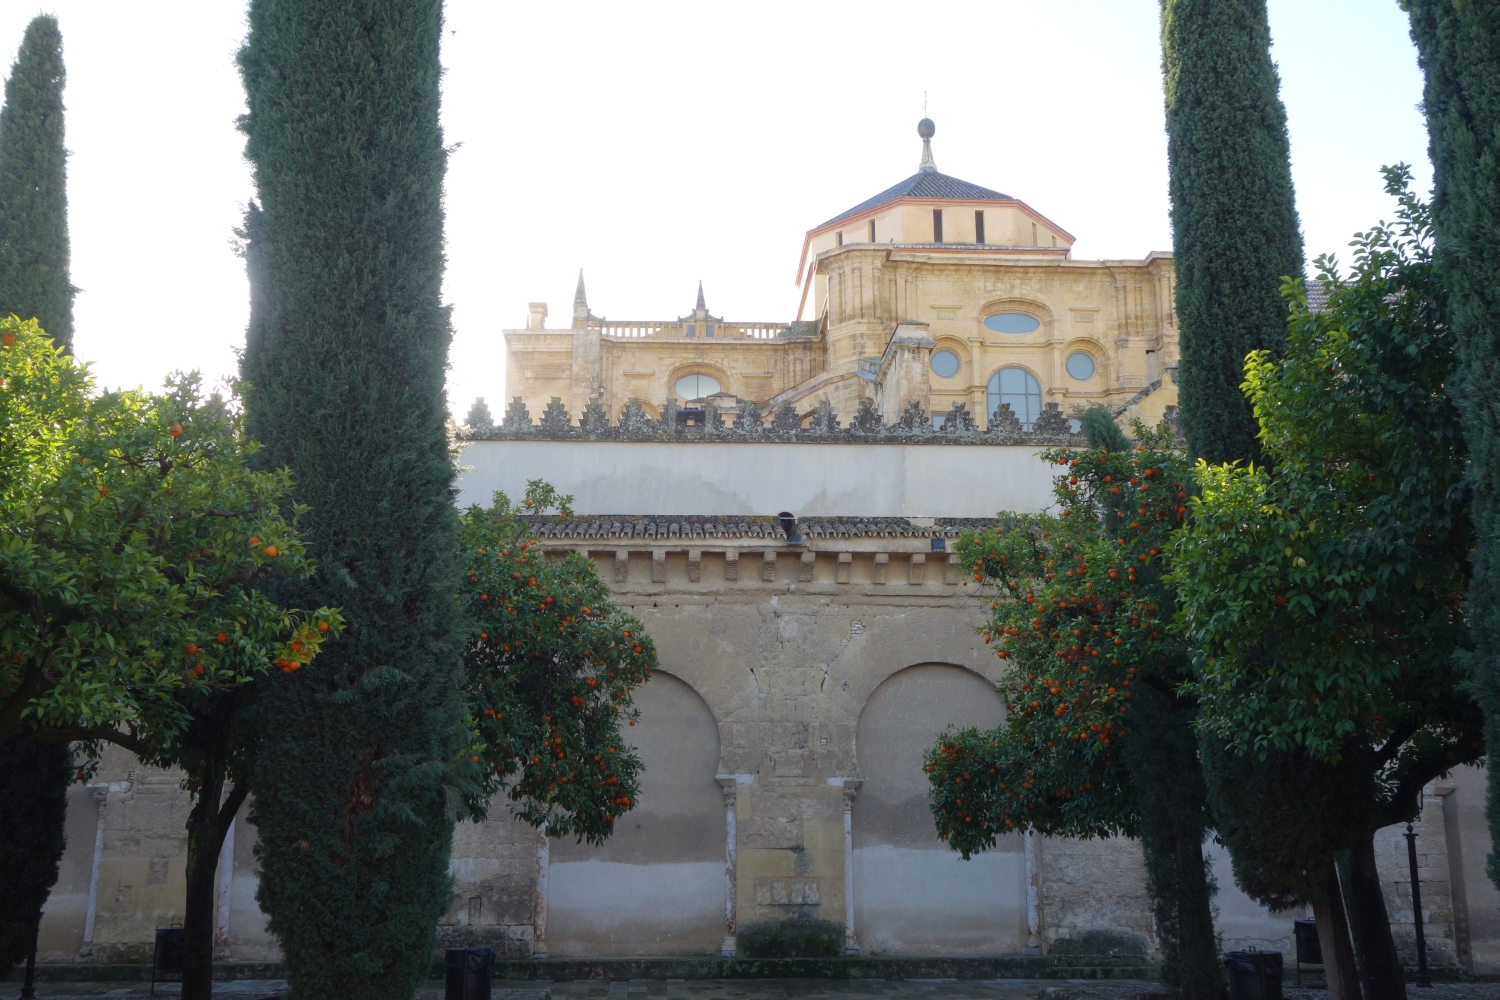 View within Patio de las Naranjas (Court of the Oranges)